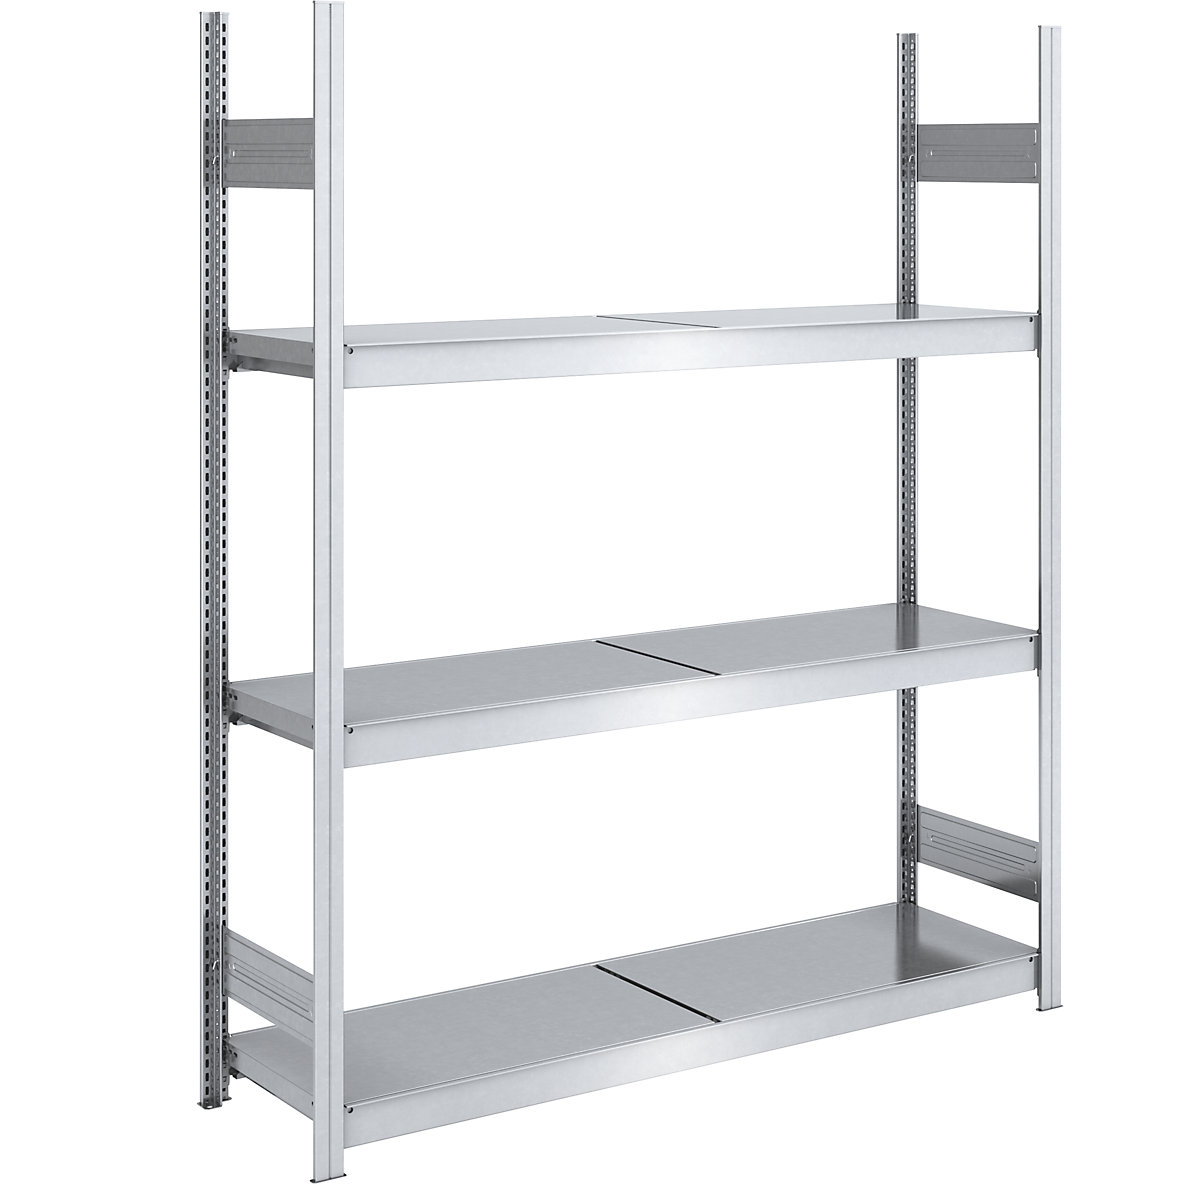 Wide span boltless shelving unit with steel shelves – hofe, height 2000 mm, shelf width 1500 mm, shelf depth 500 mm, standard shelf unit